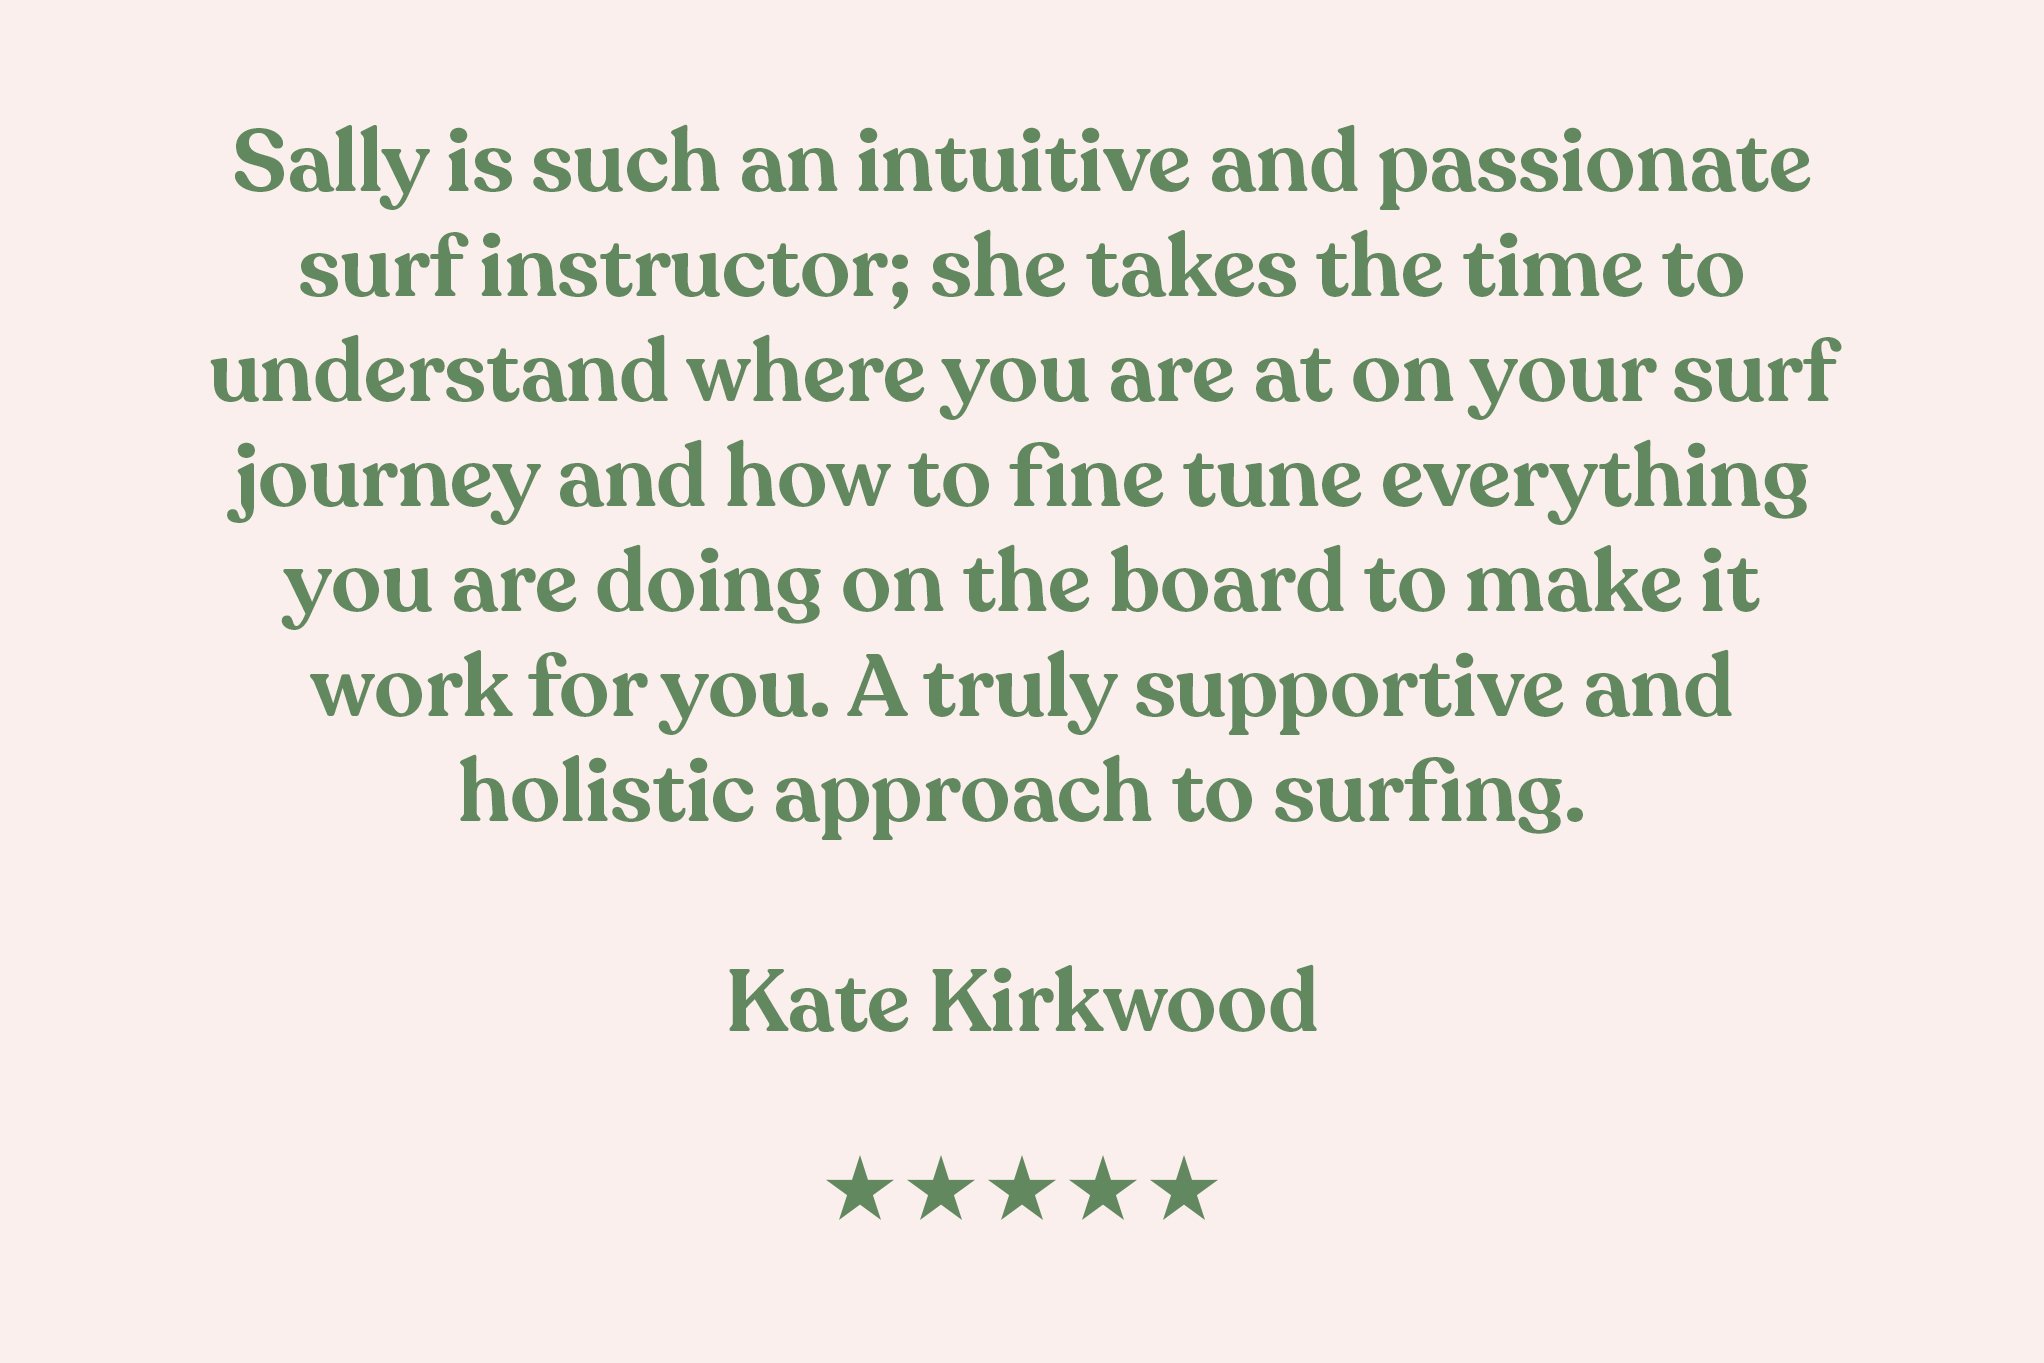 Kate Kirkwood review.jpg